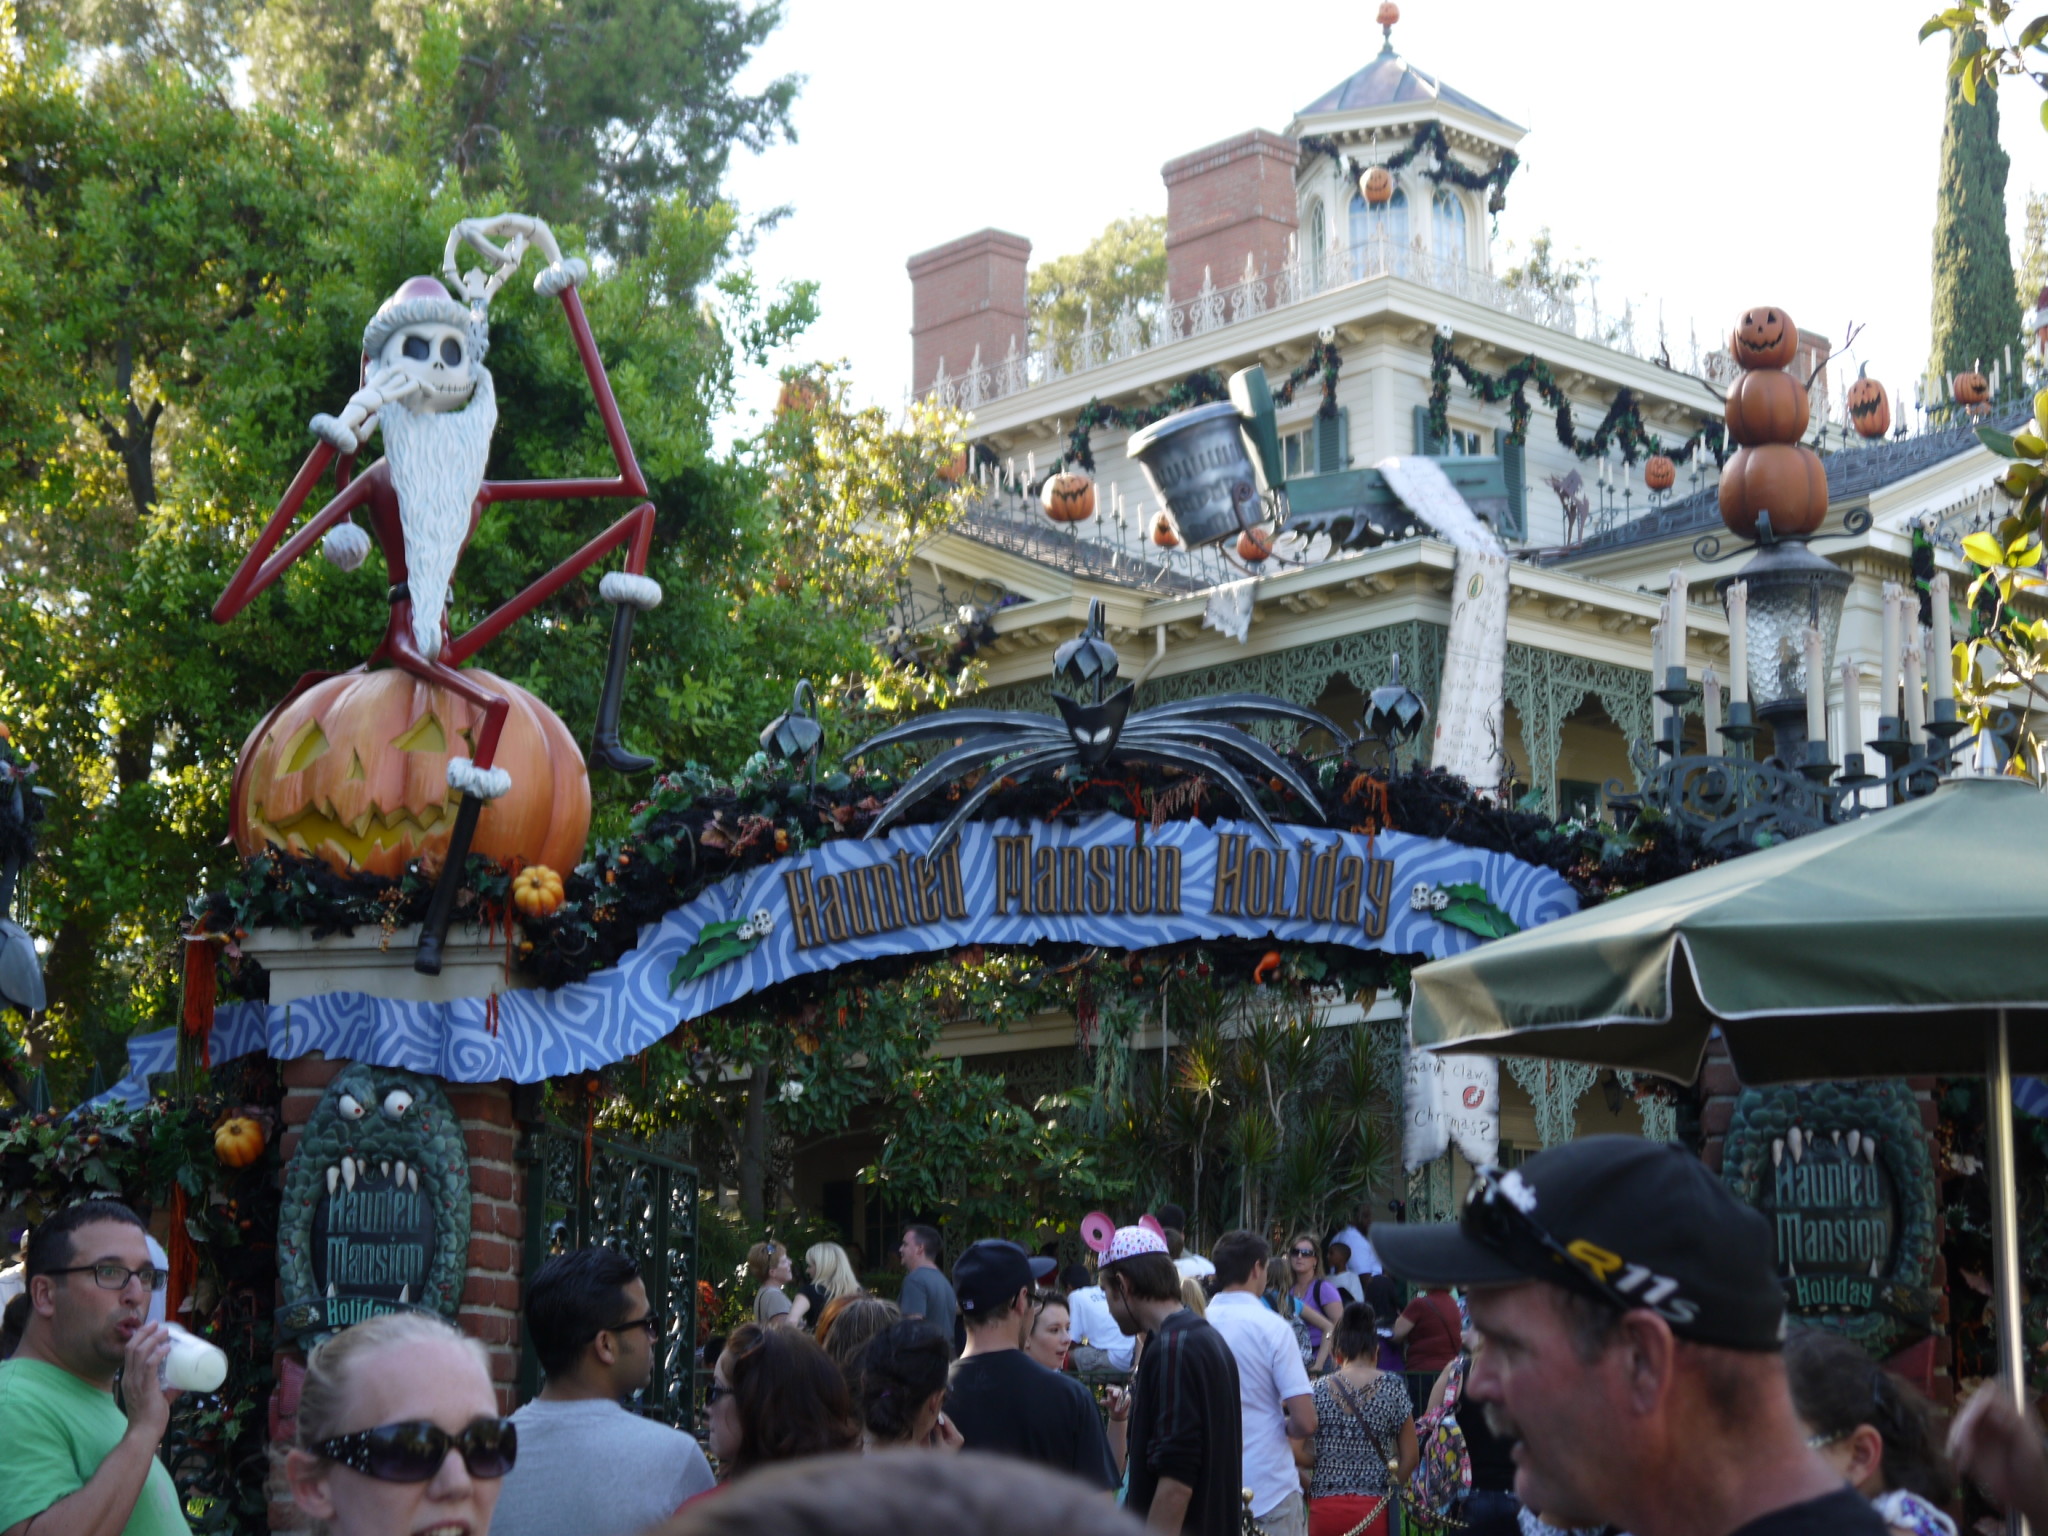 Halloween Time Returns to Disneyland!